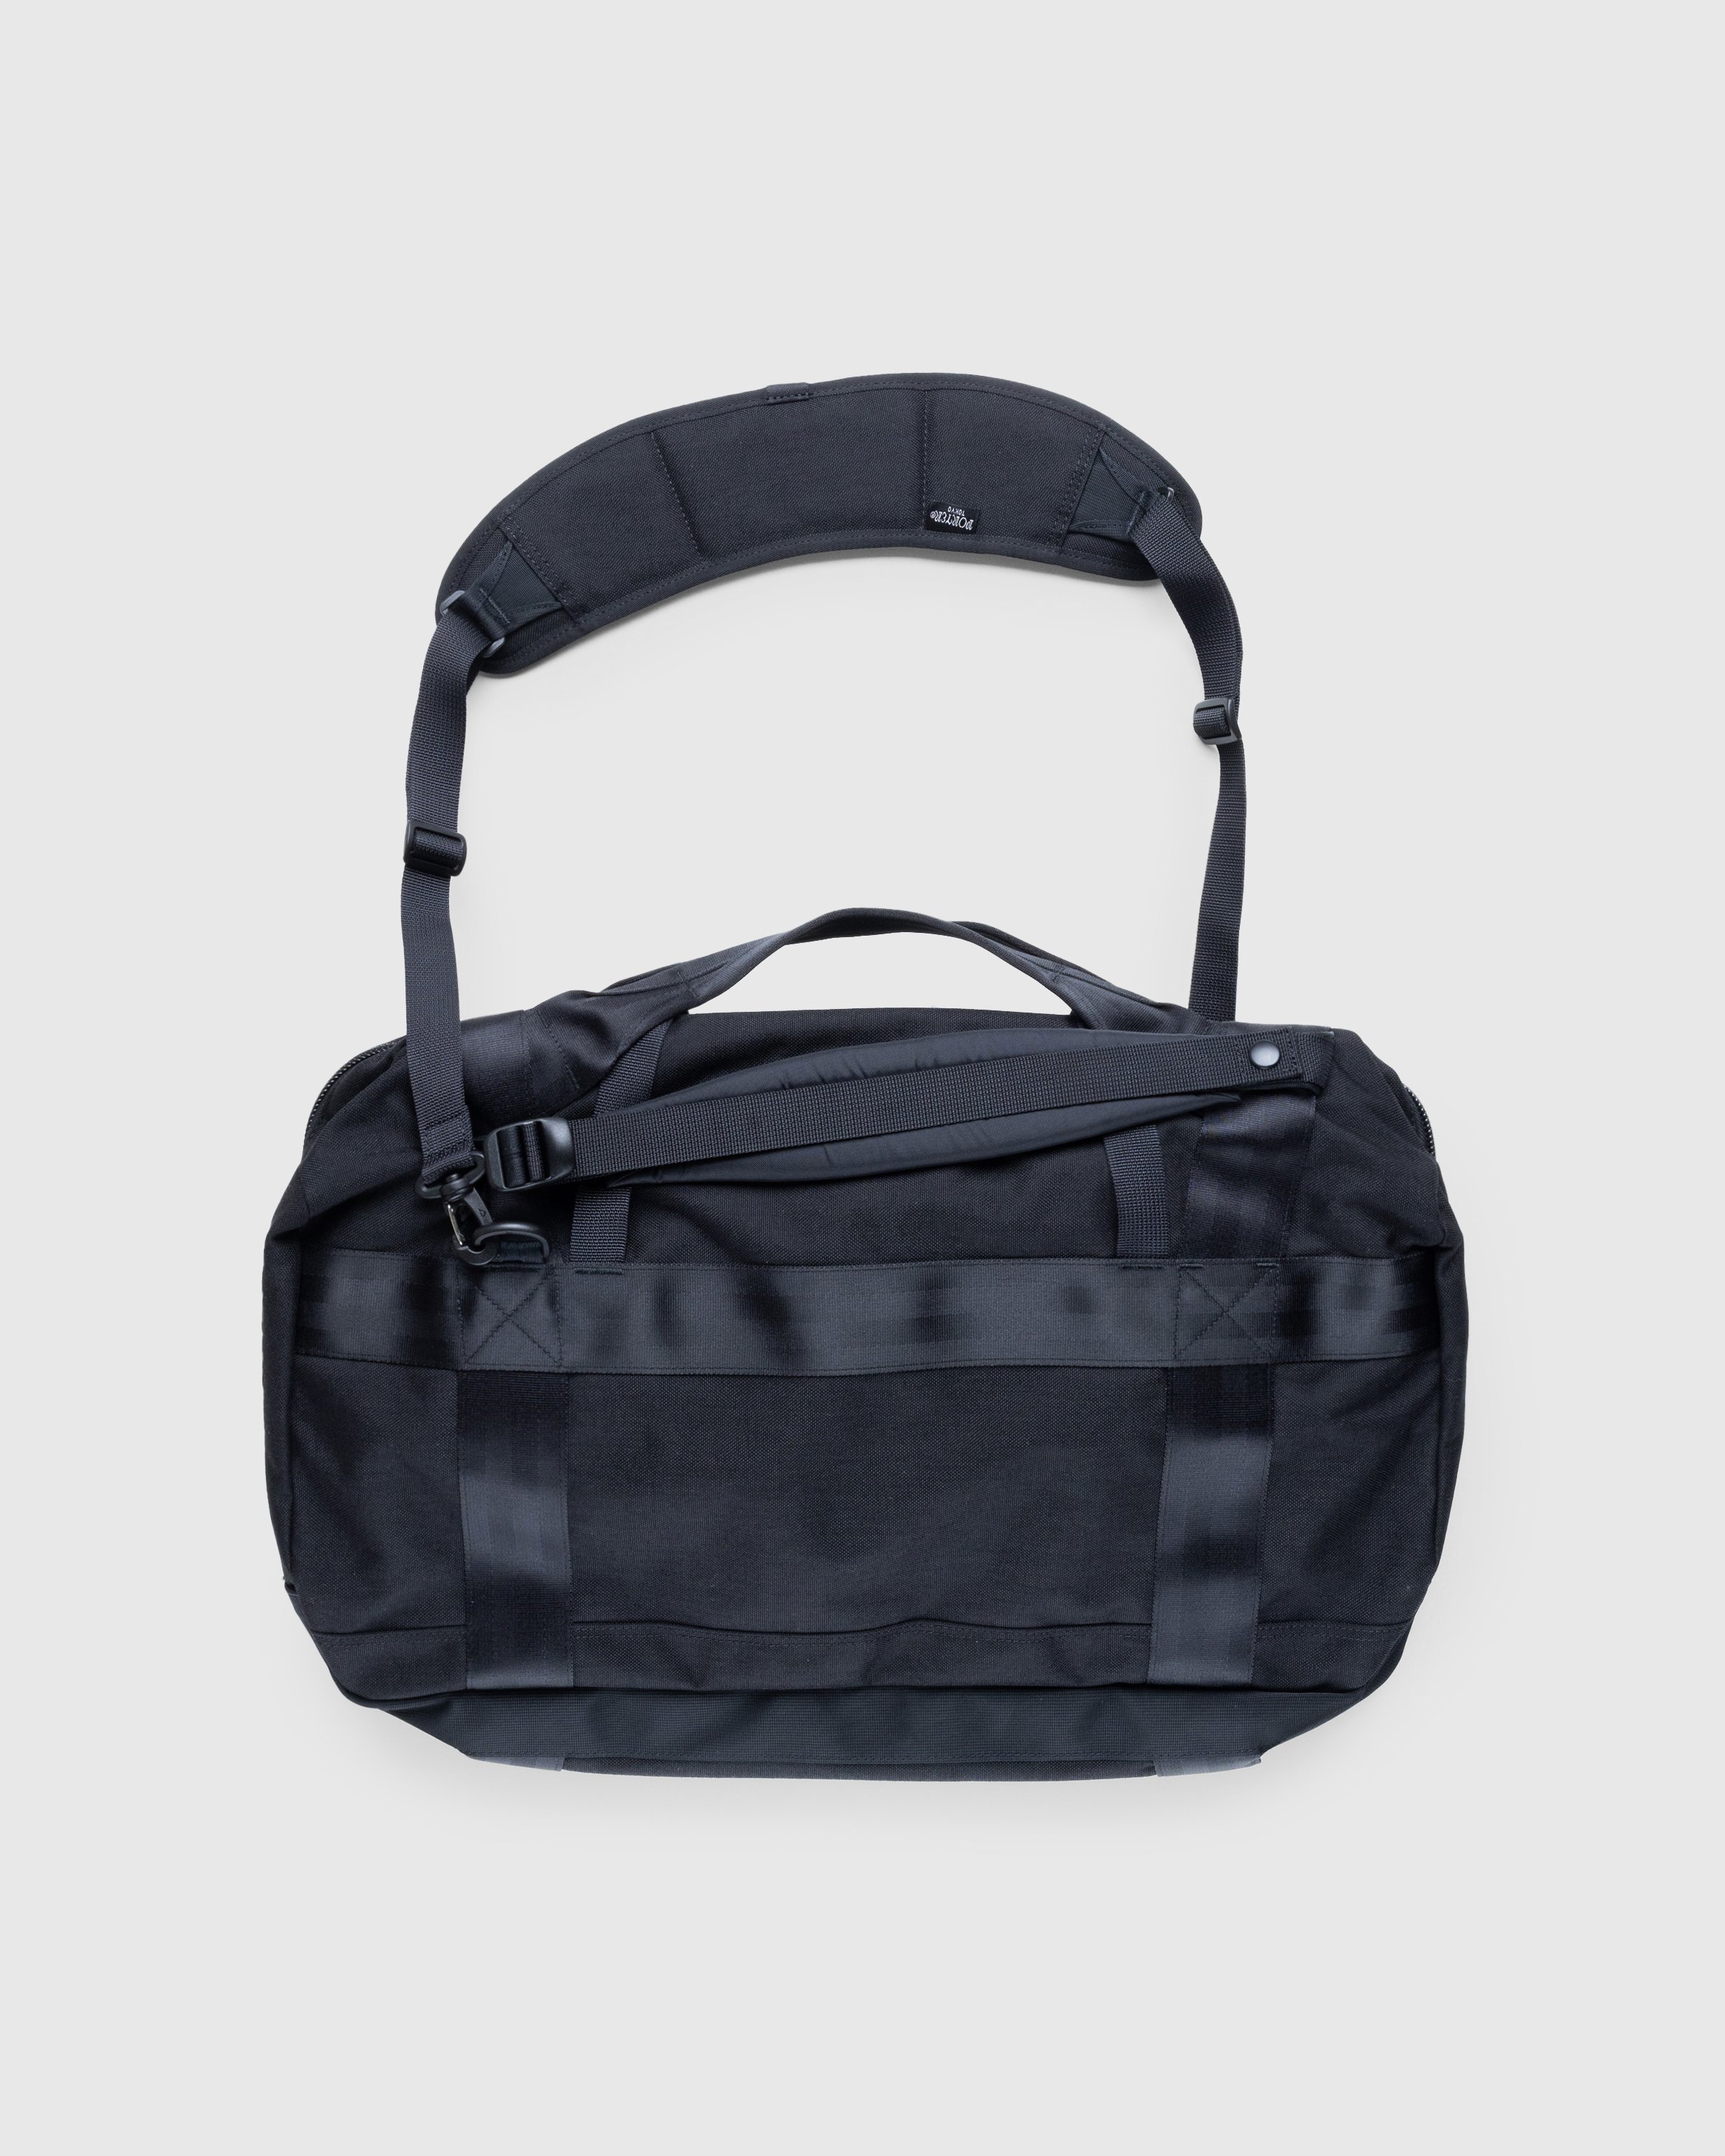 Porter-Yoshida & Co. - Booth Pack 3-Way Duffle Bag Black - Accessories - Black - Image 2